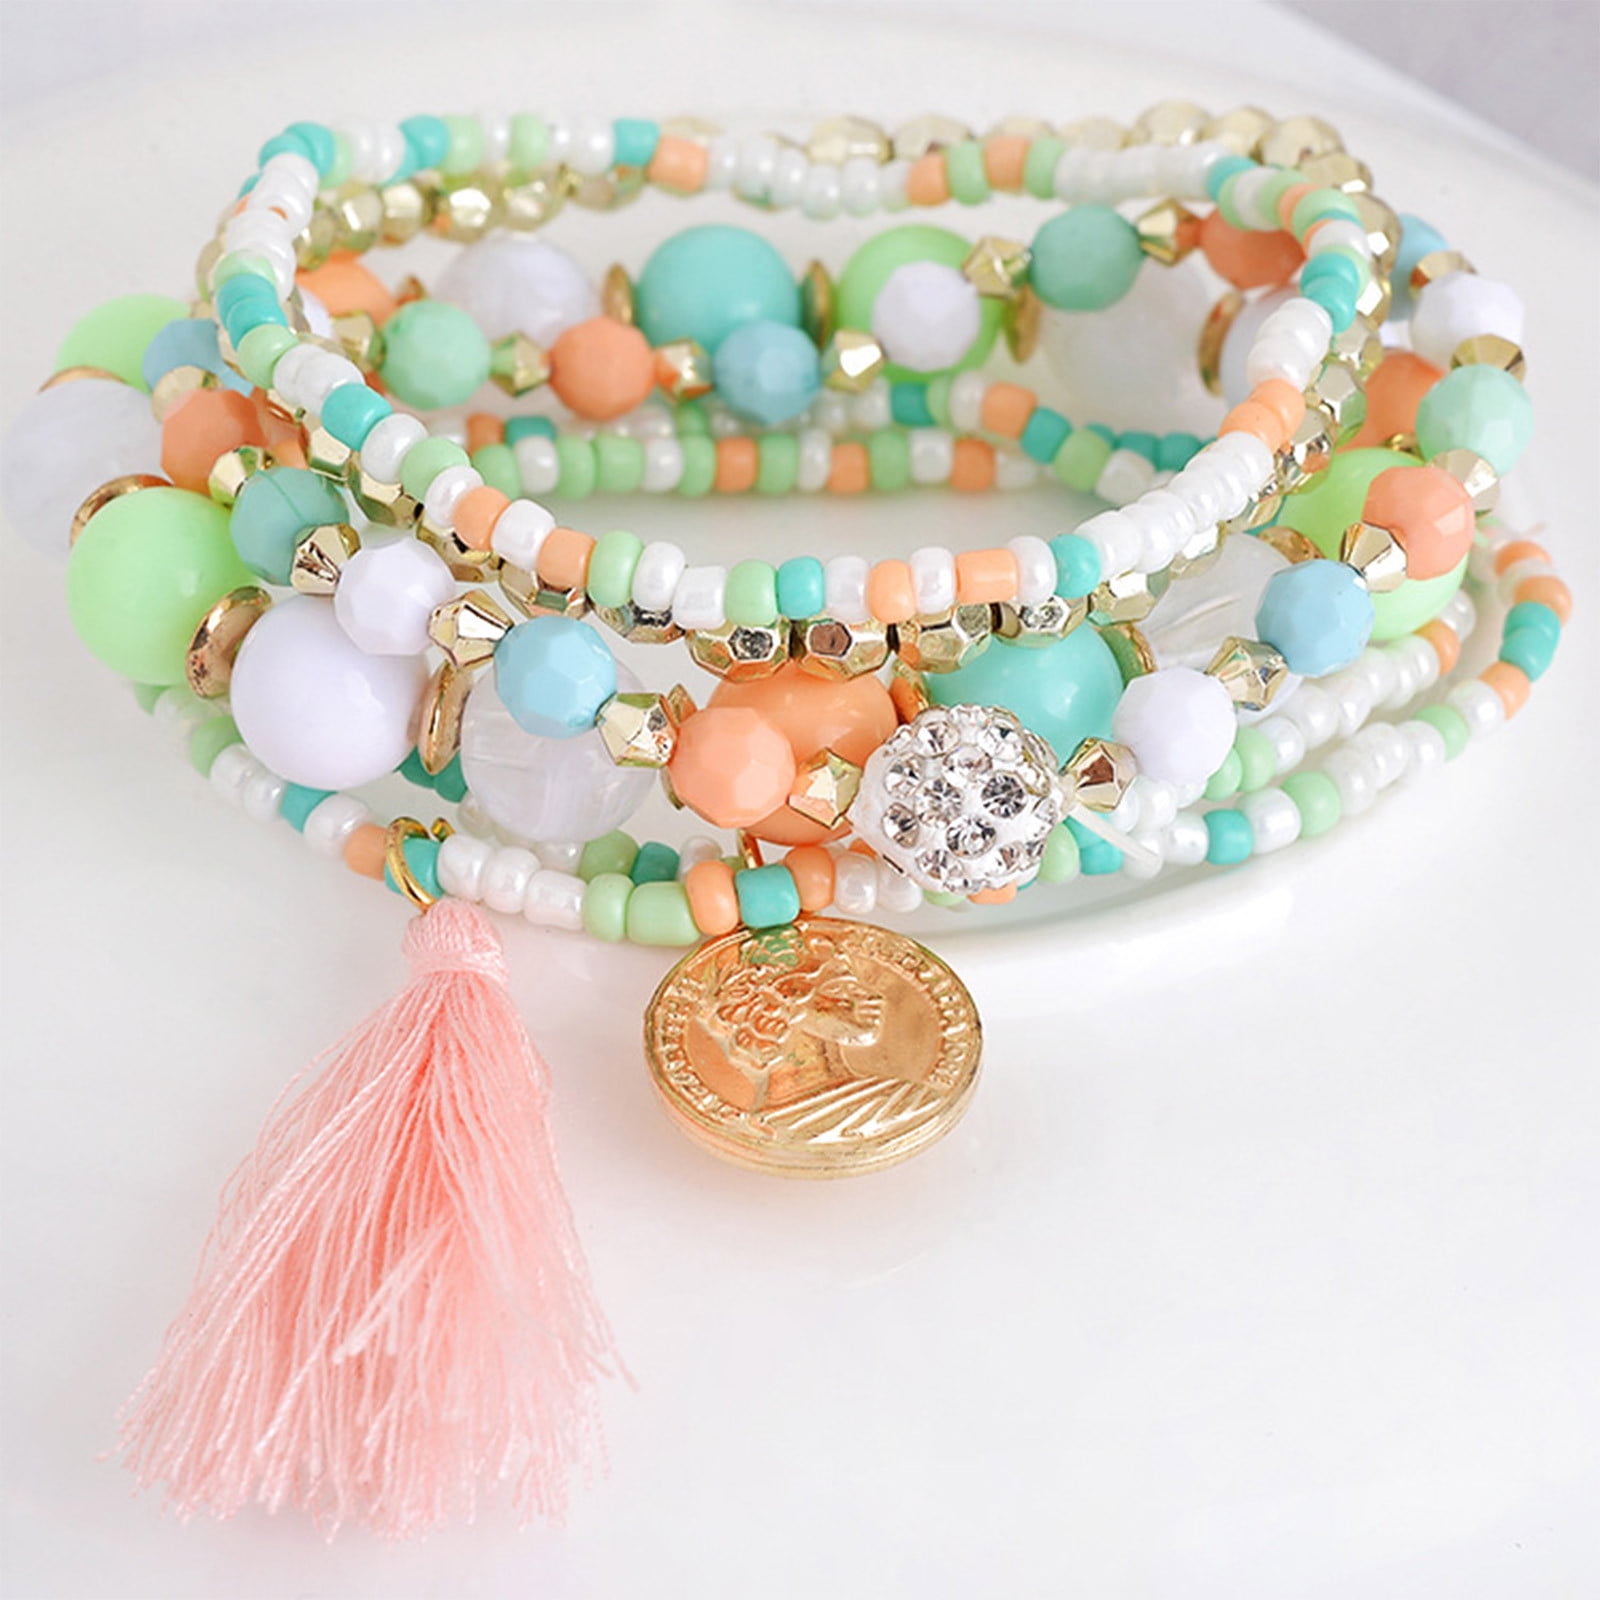 How to make a Bohemian Bracelet With Miyuki Delica's - Beads & Basics